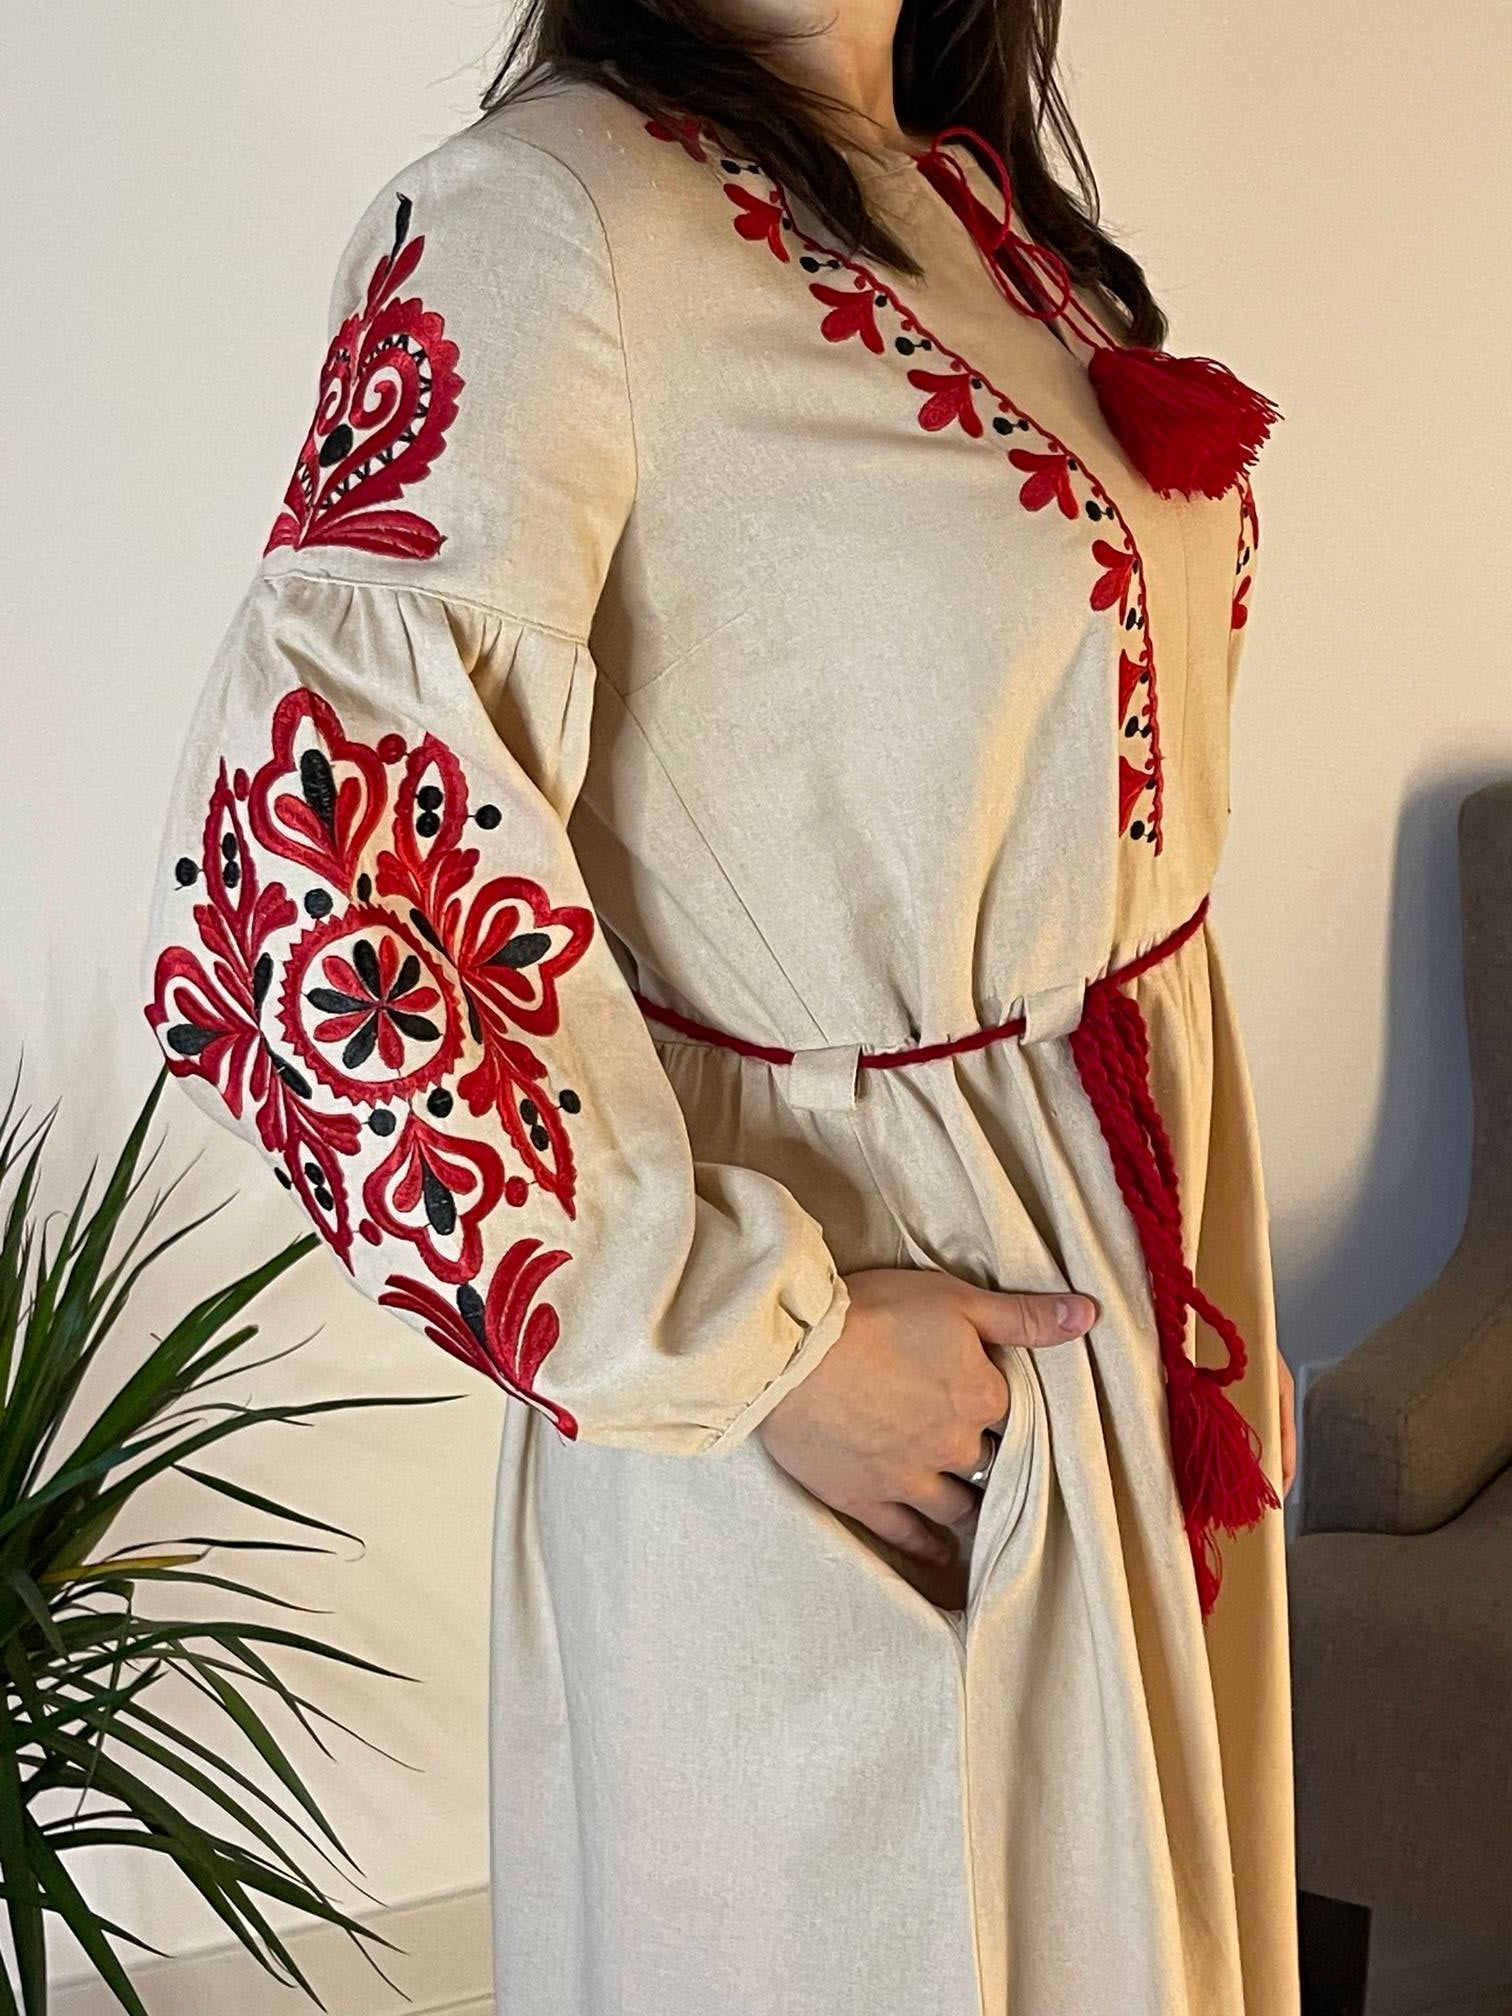 Sandstone Serenade: The Charming Short Beige Ukrainian Vyshyvanka Dress with Radiant Red Embroidery (Жіноча Вишиванка)